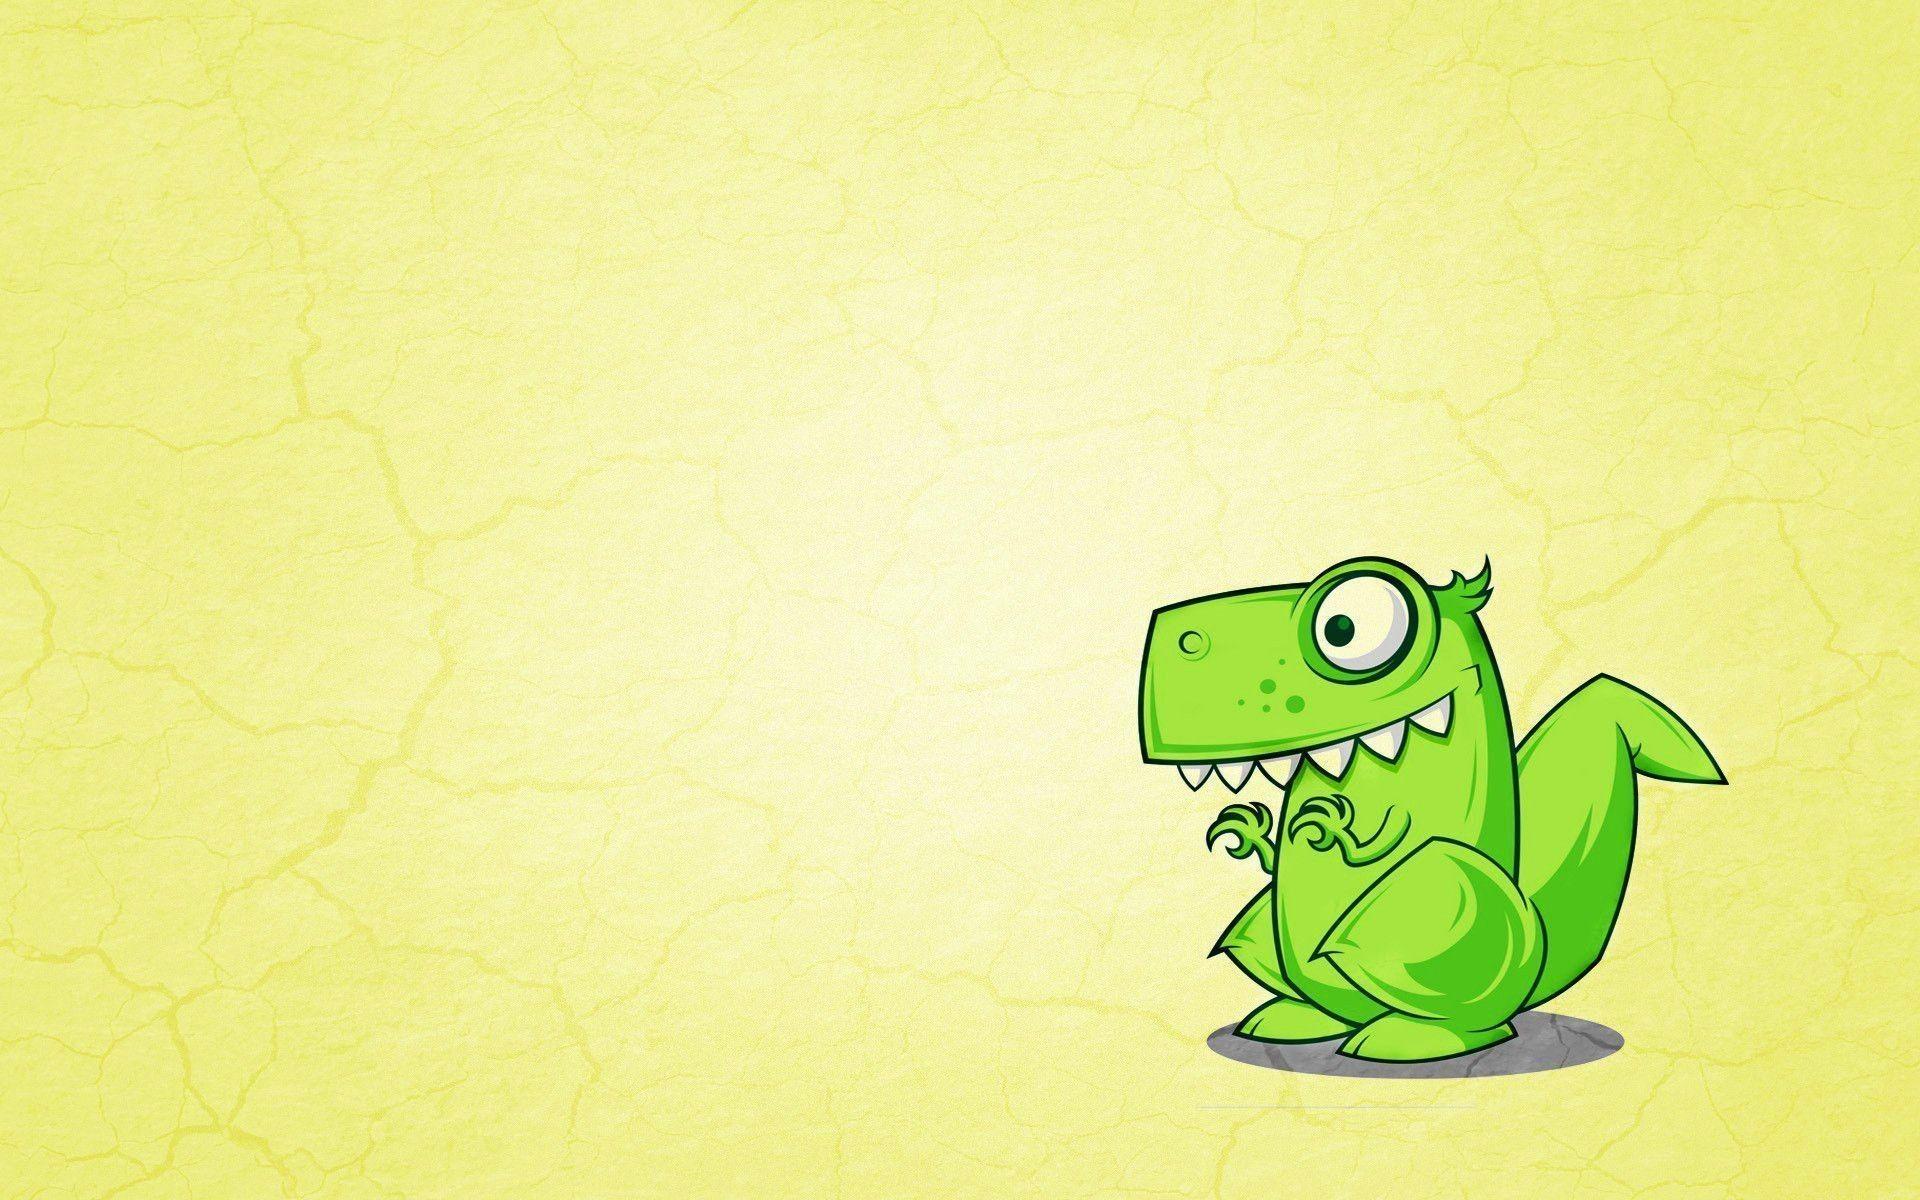 Dinosaur backgroundDownload free full HD background